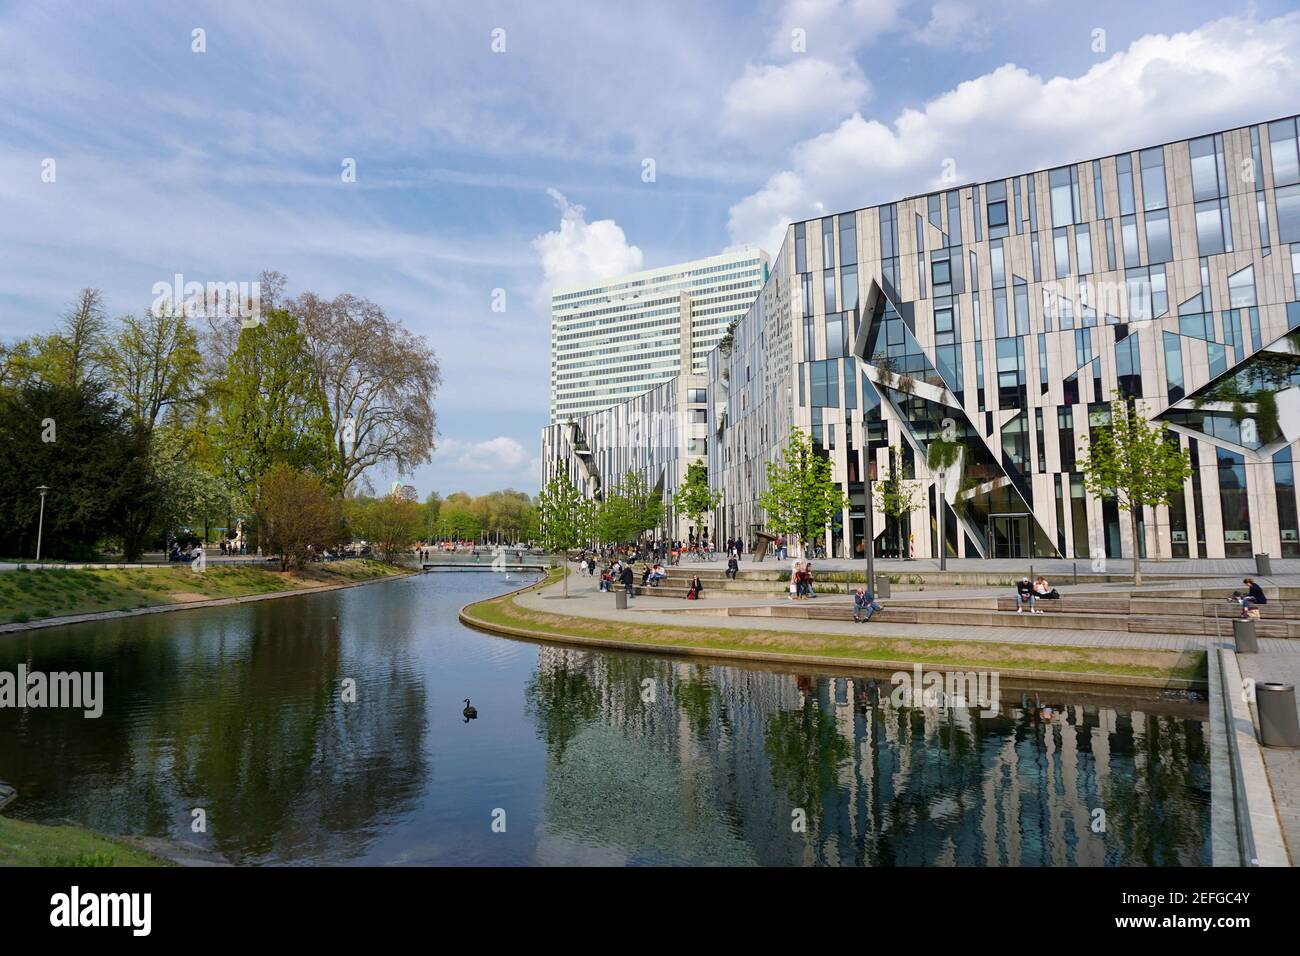 The Kö-Bogen in Düsseldorf, located near the 'Hofgarten' public park. It has been designed by the New York star architect Daniel Libeskind. Stock Photo